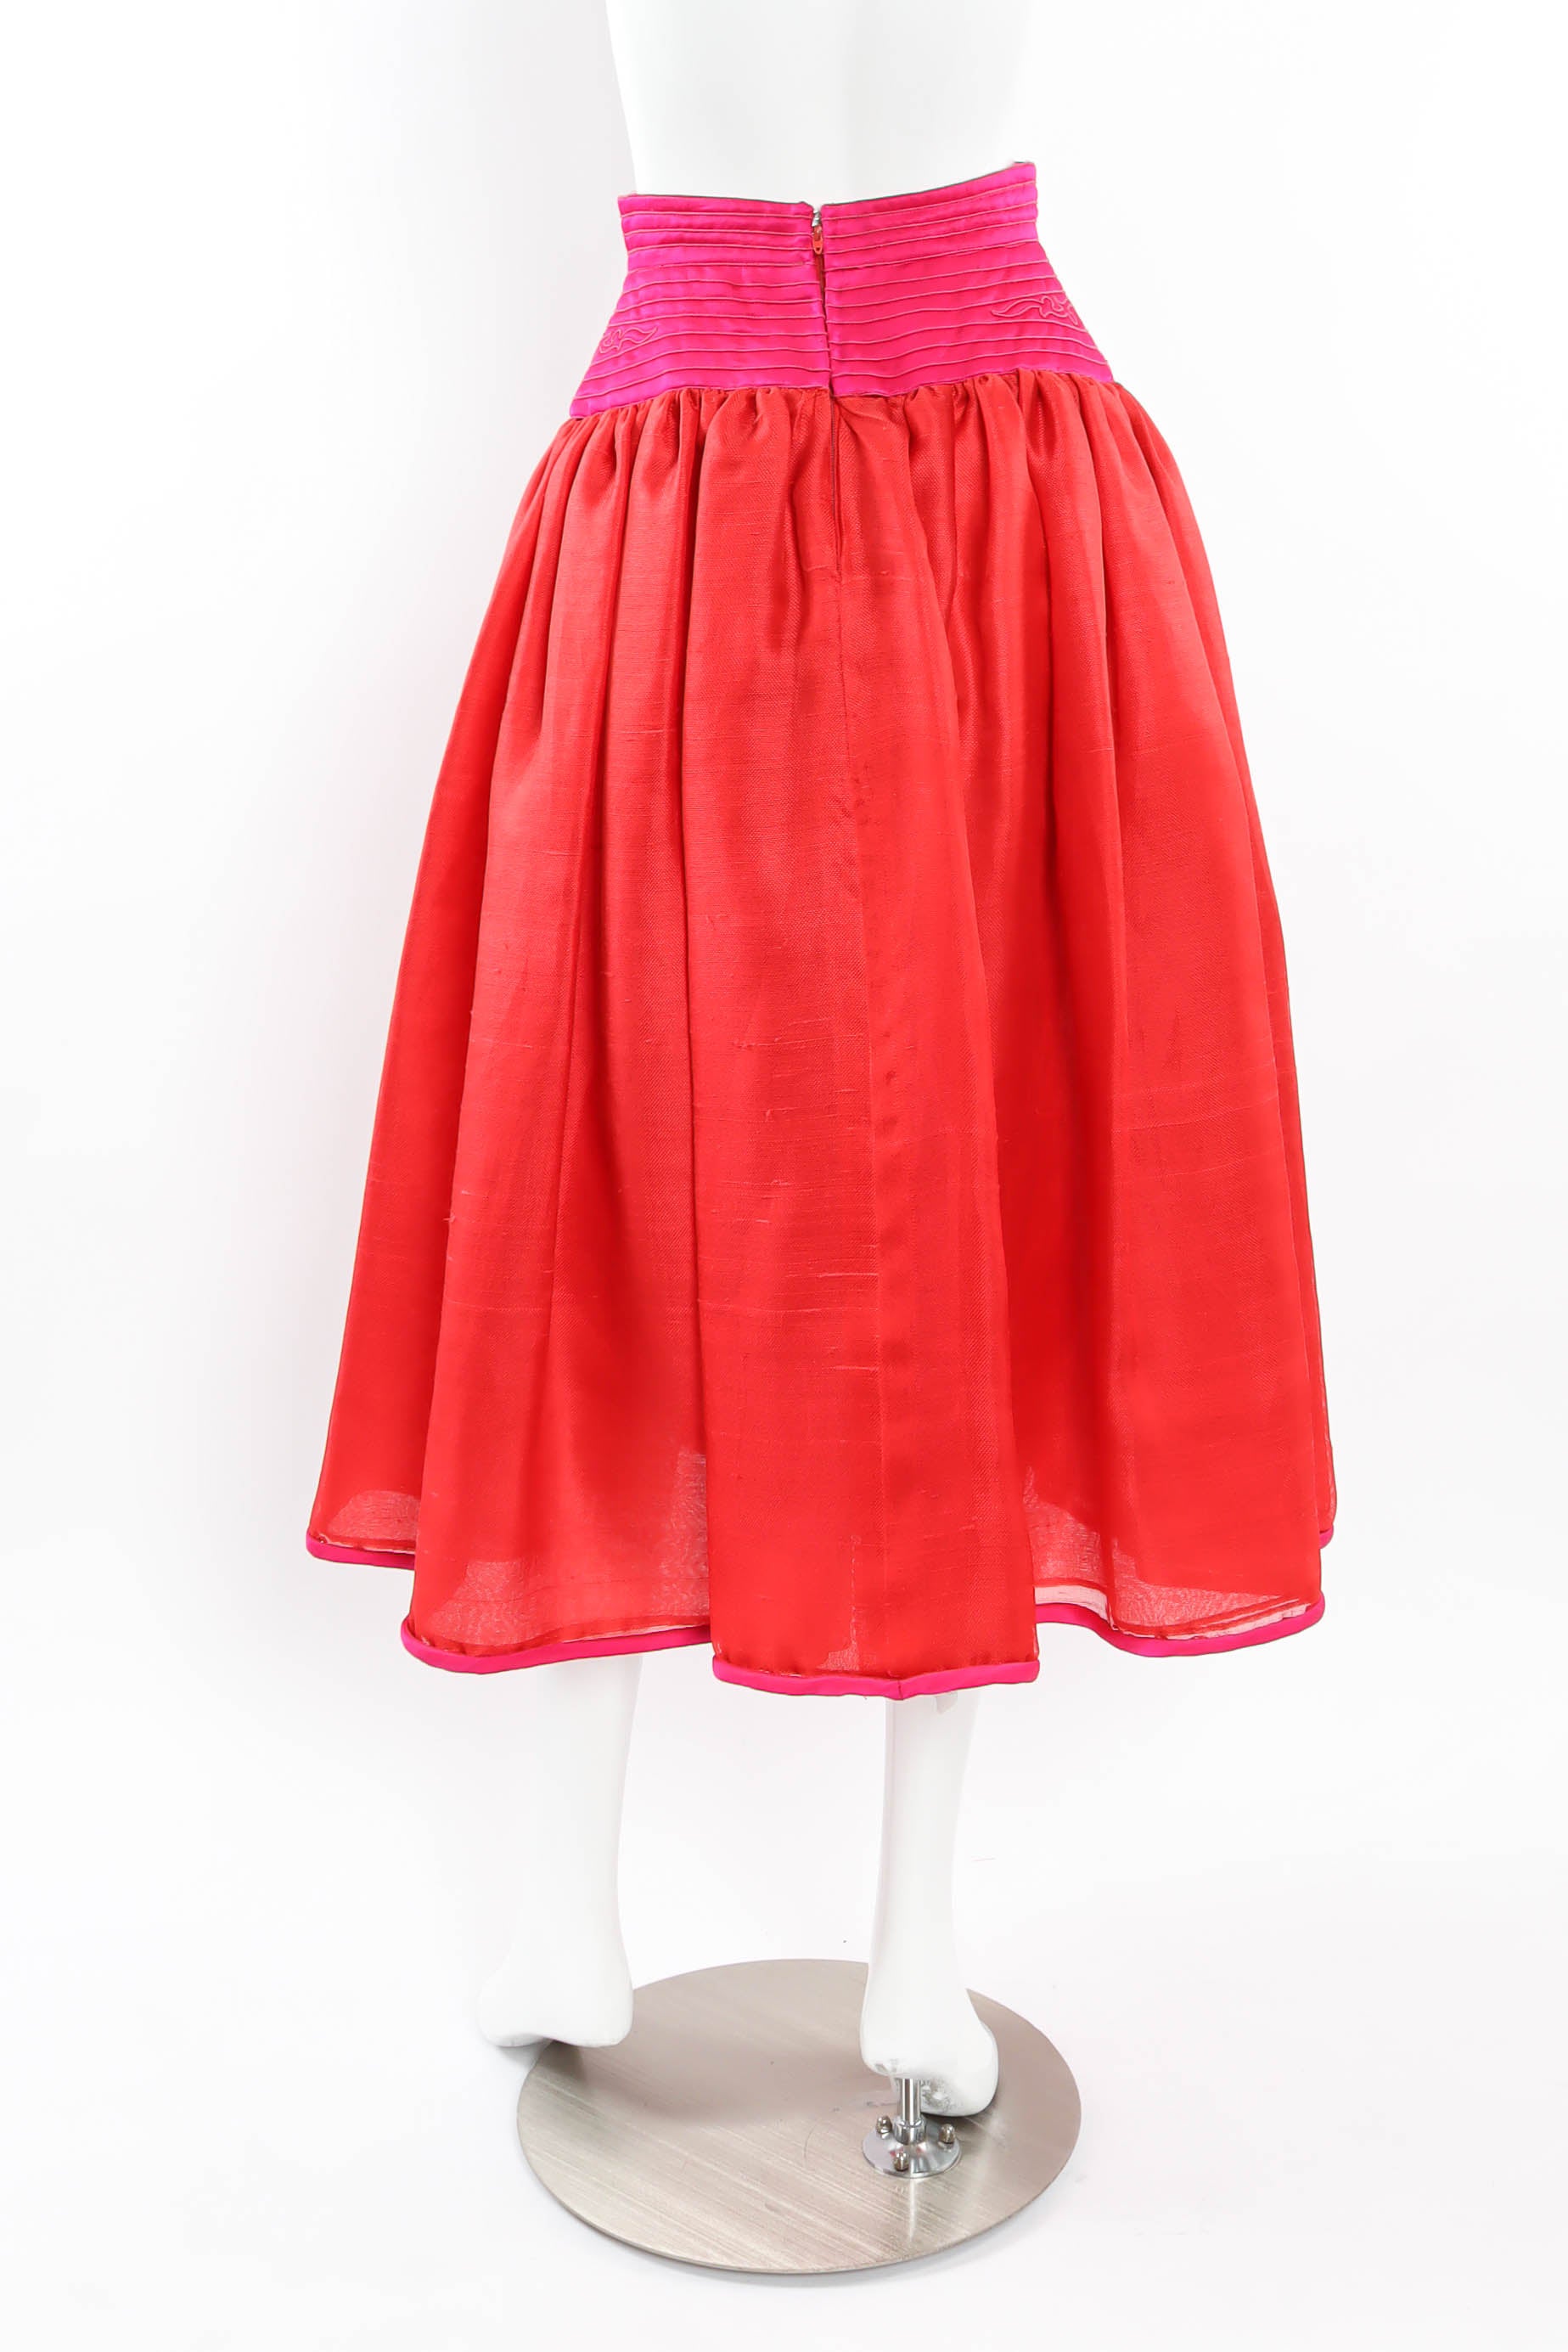 Vintage Oscar de la Renta Floral Top & Skirt Set mannequin skirt back  @ Recess LA